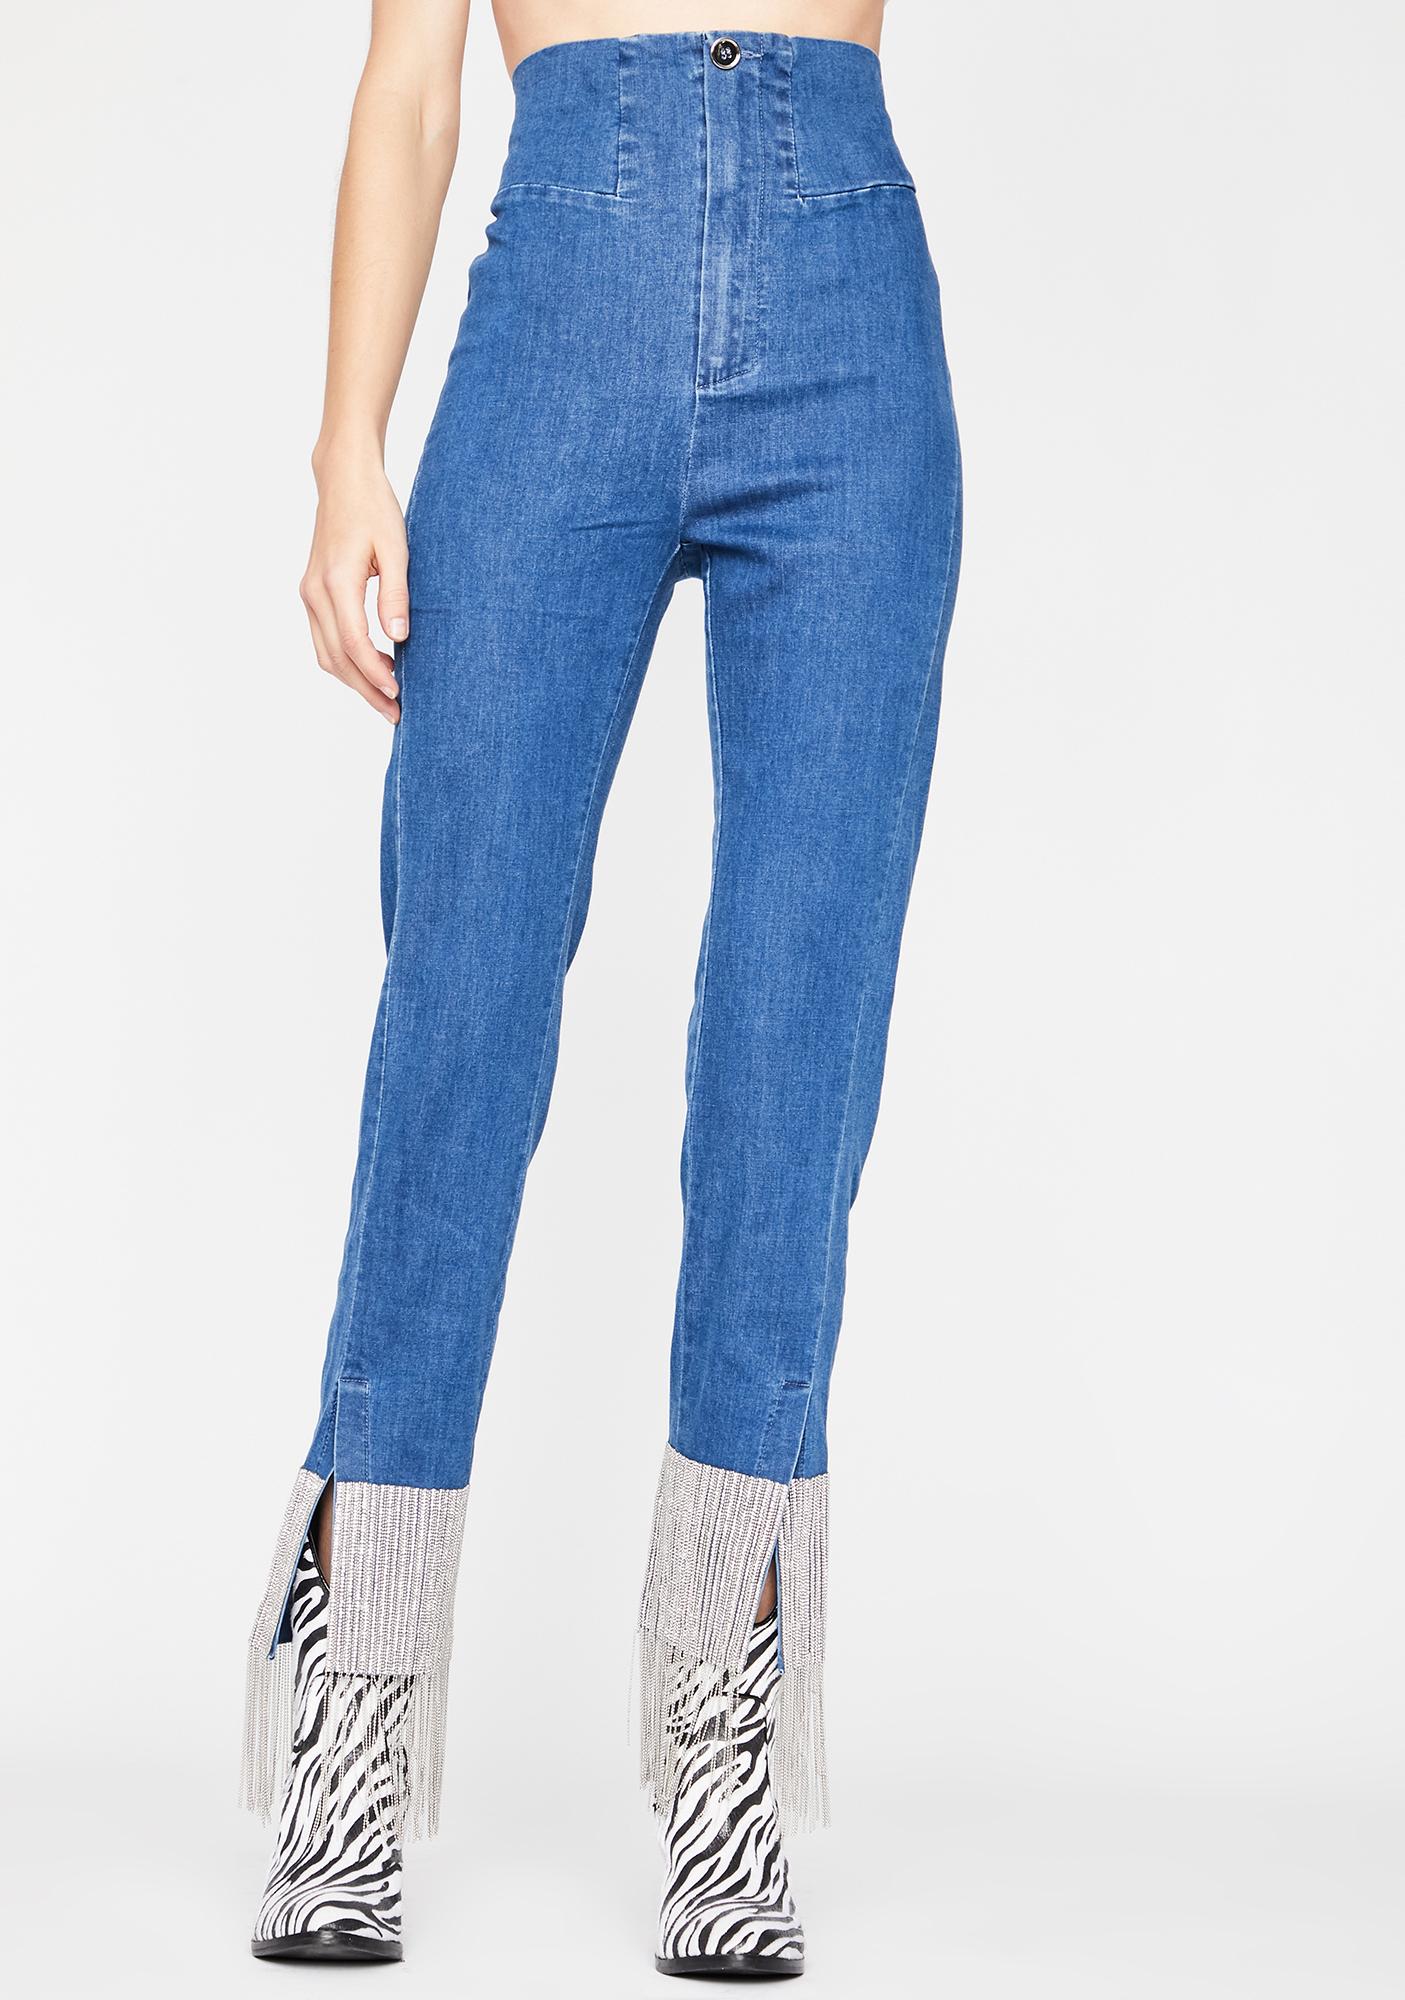 fringe jeans